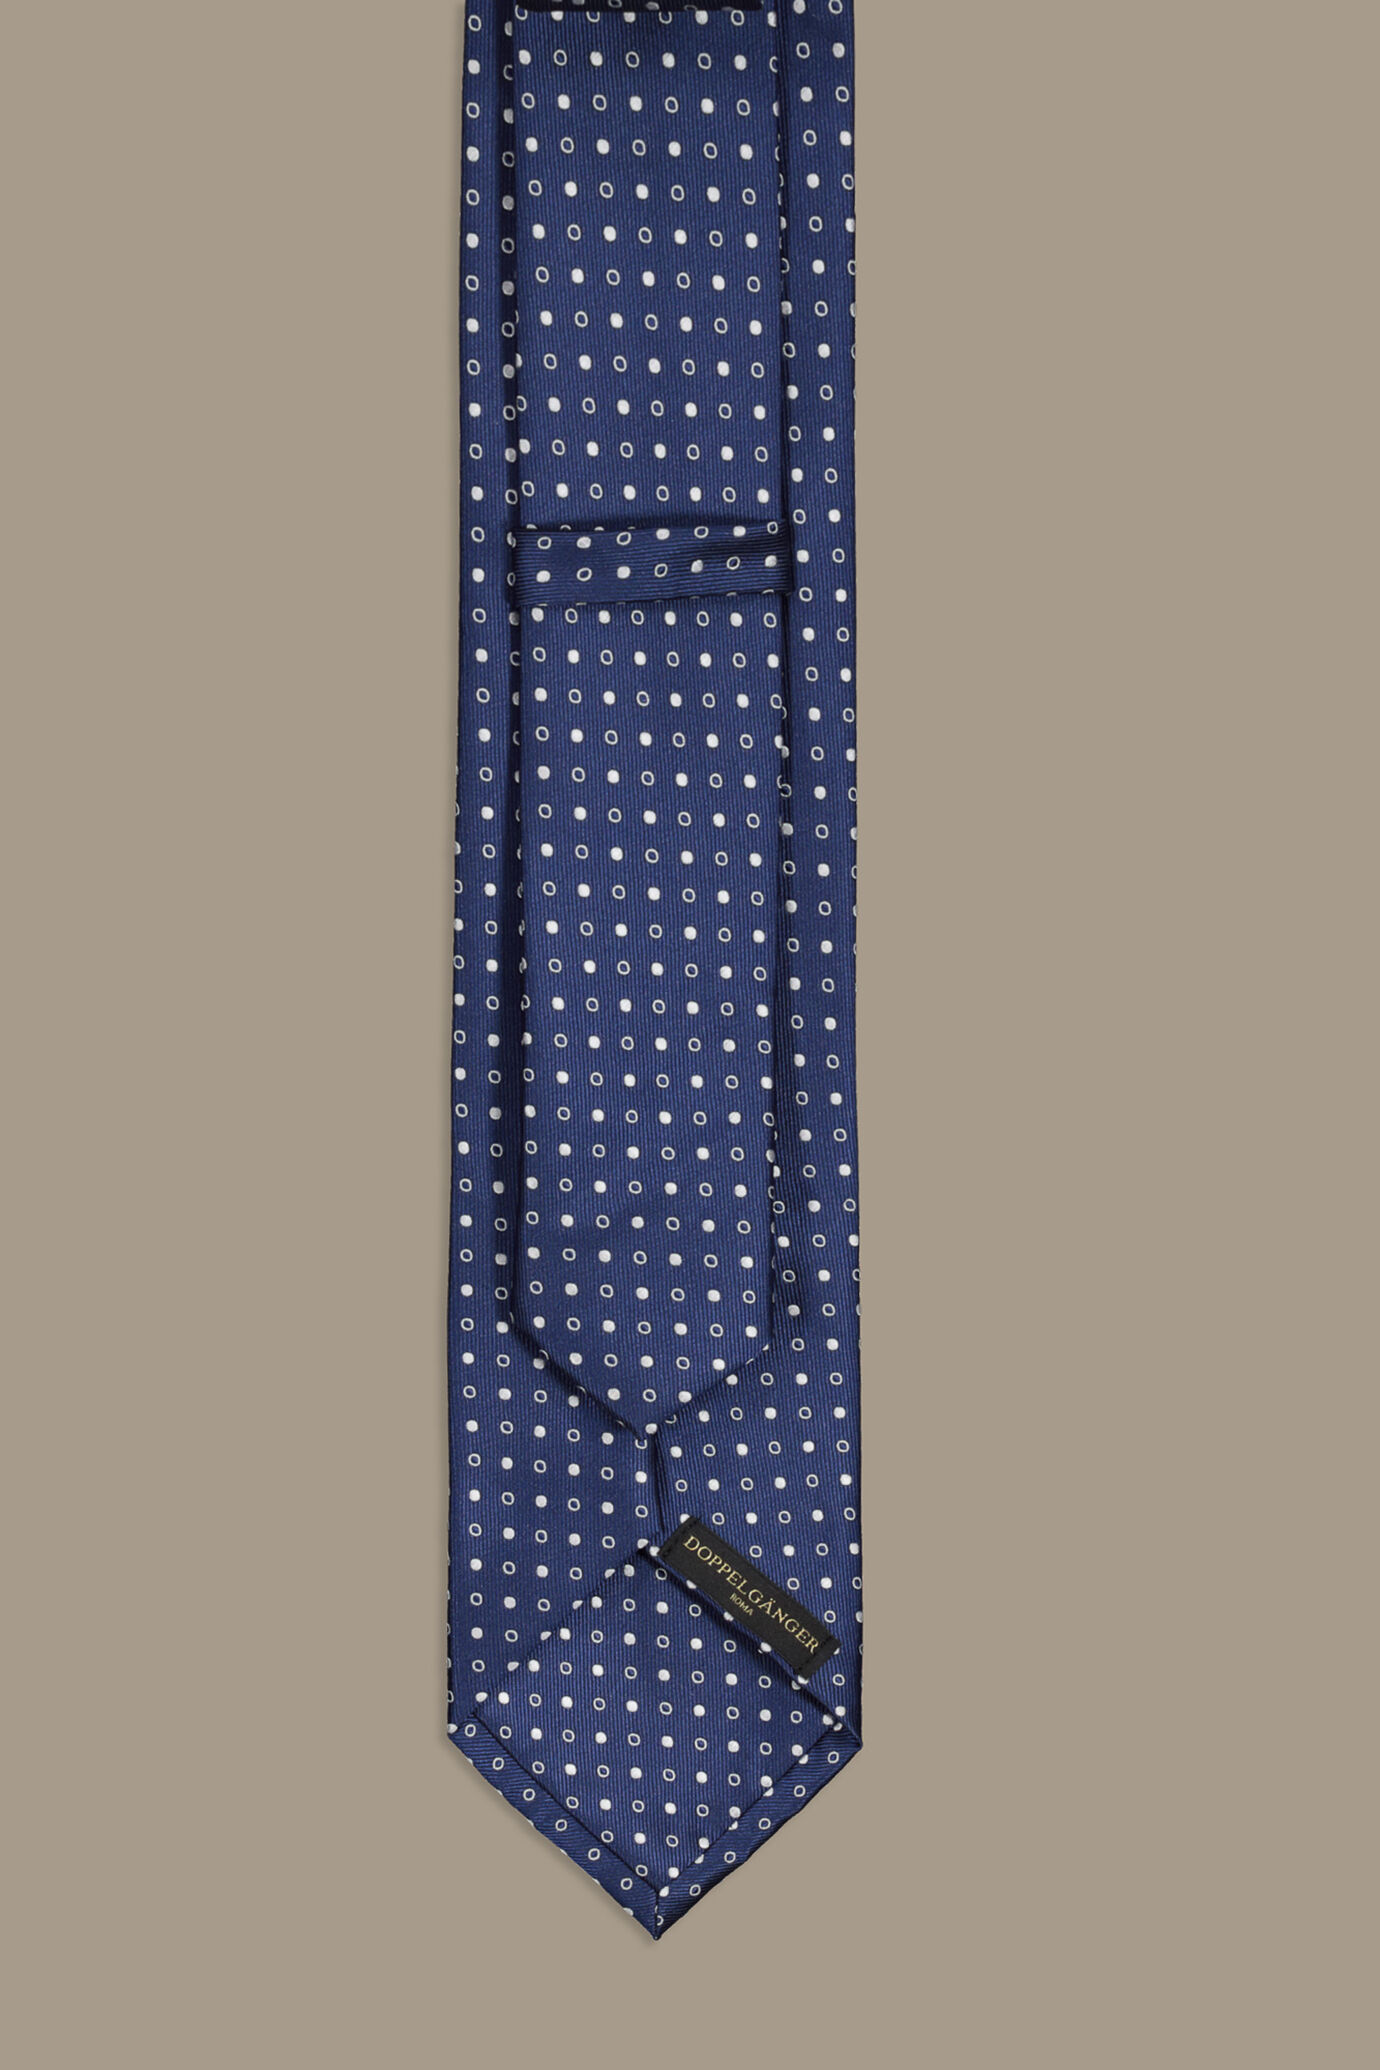 Cravatta uomo jaquard blue pois bianchi e tono su tono image number 1